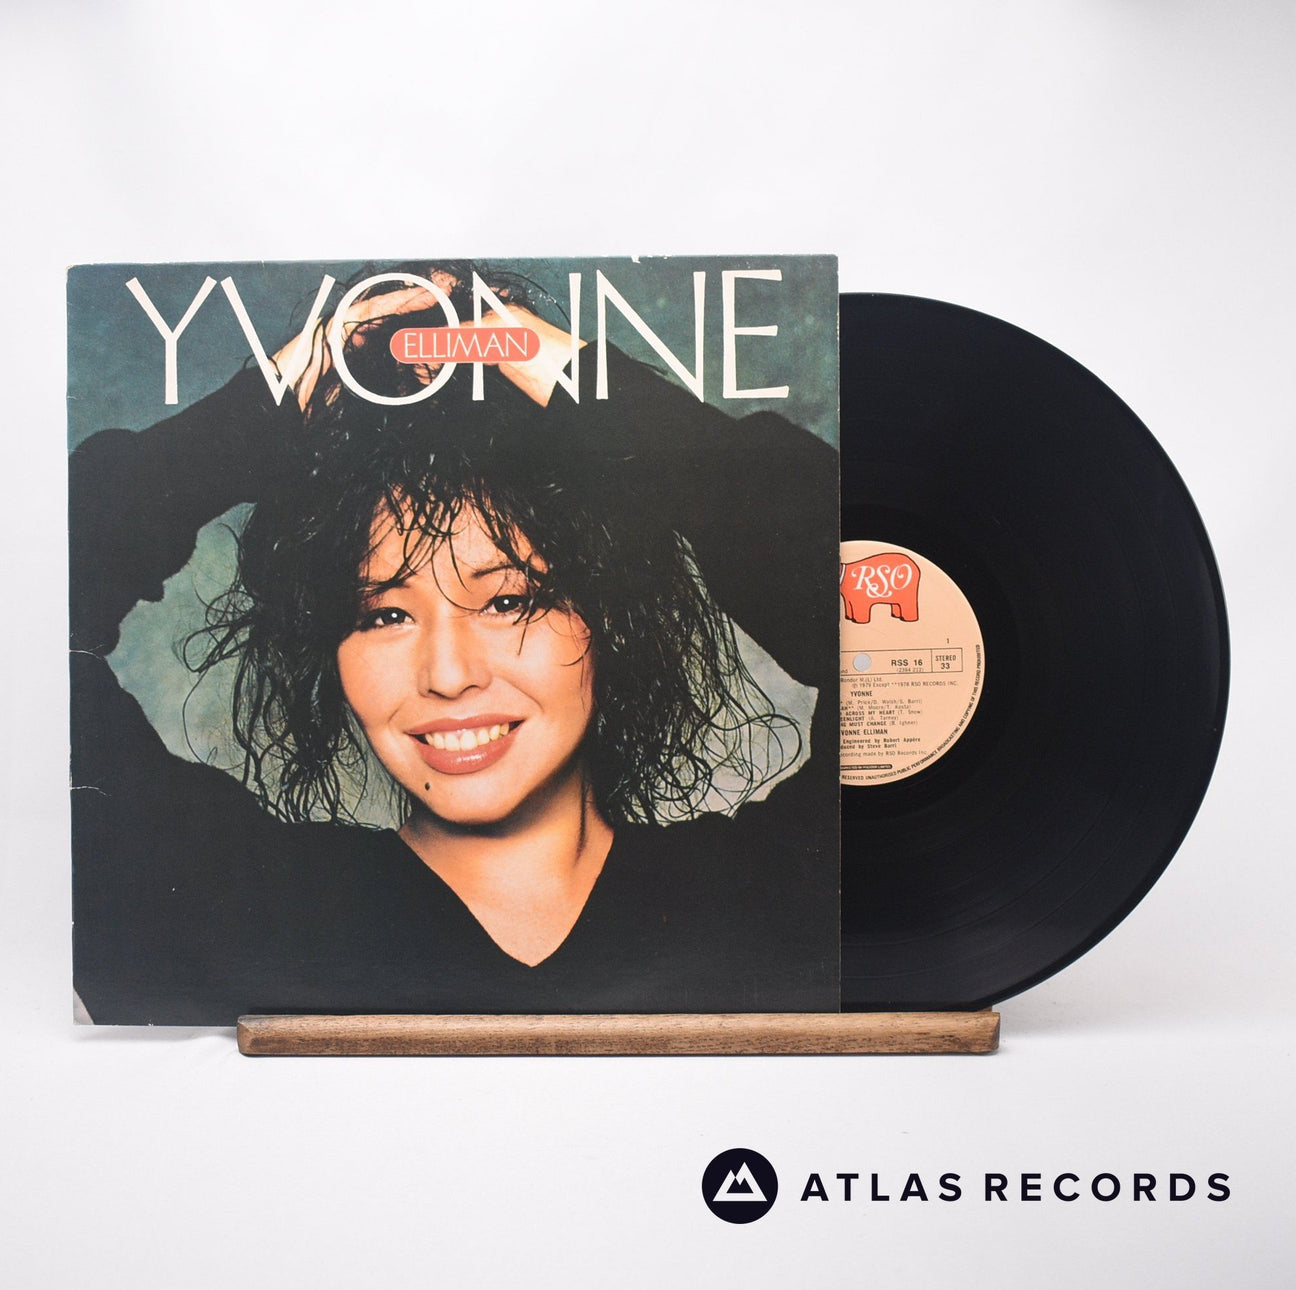 Yvonne Elliman Yvonne LP Vinyl Record - Front Cover & Record